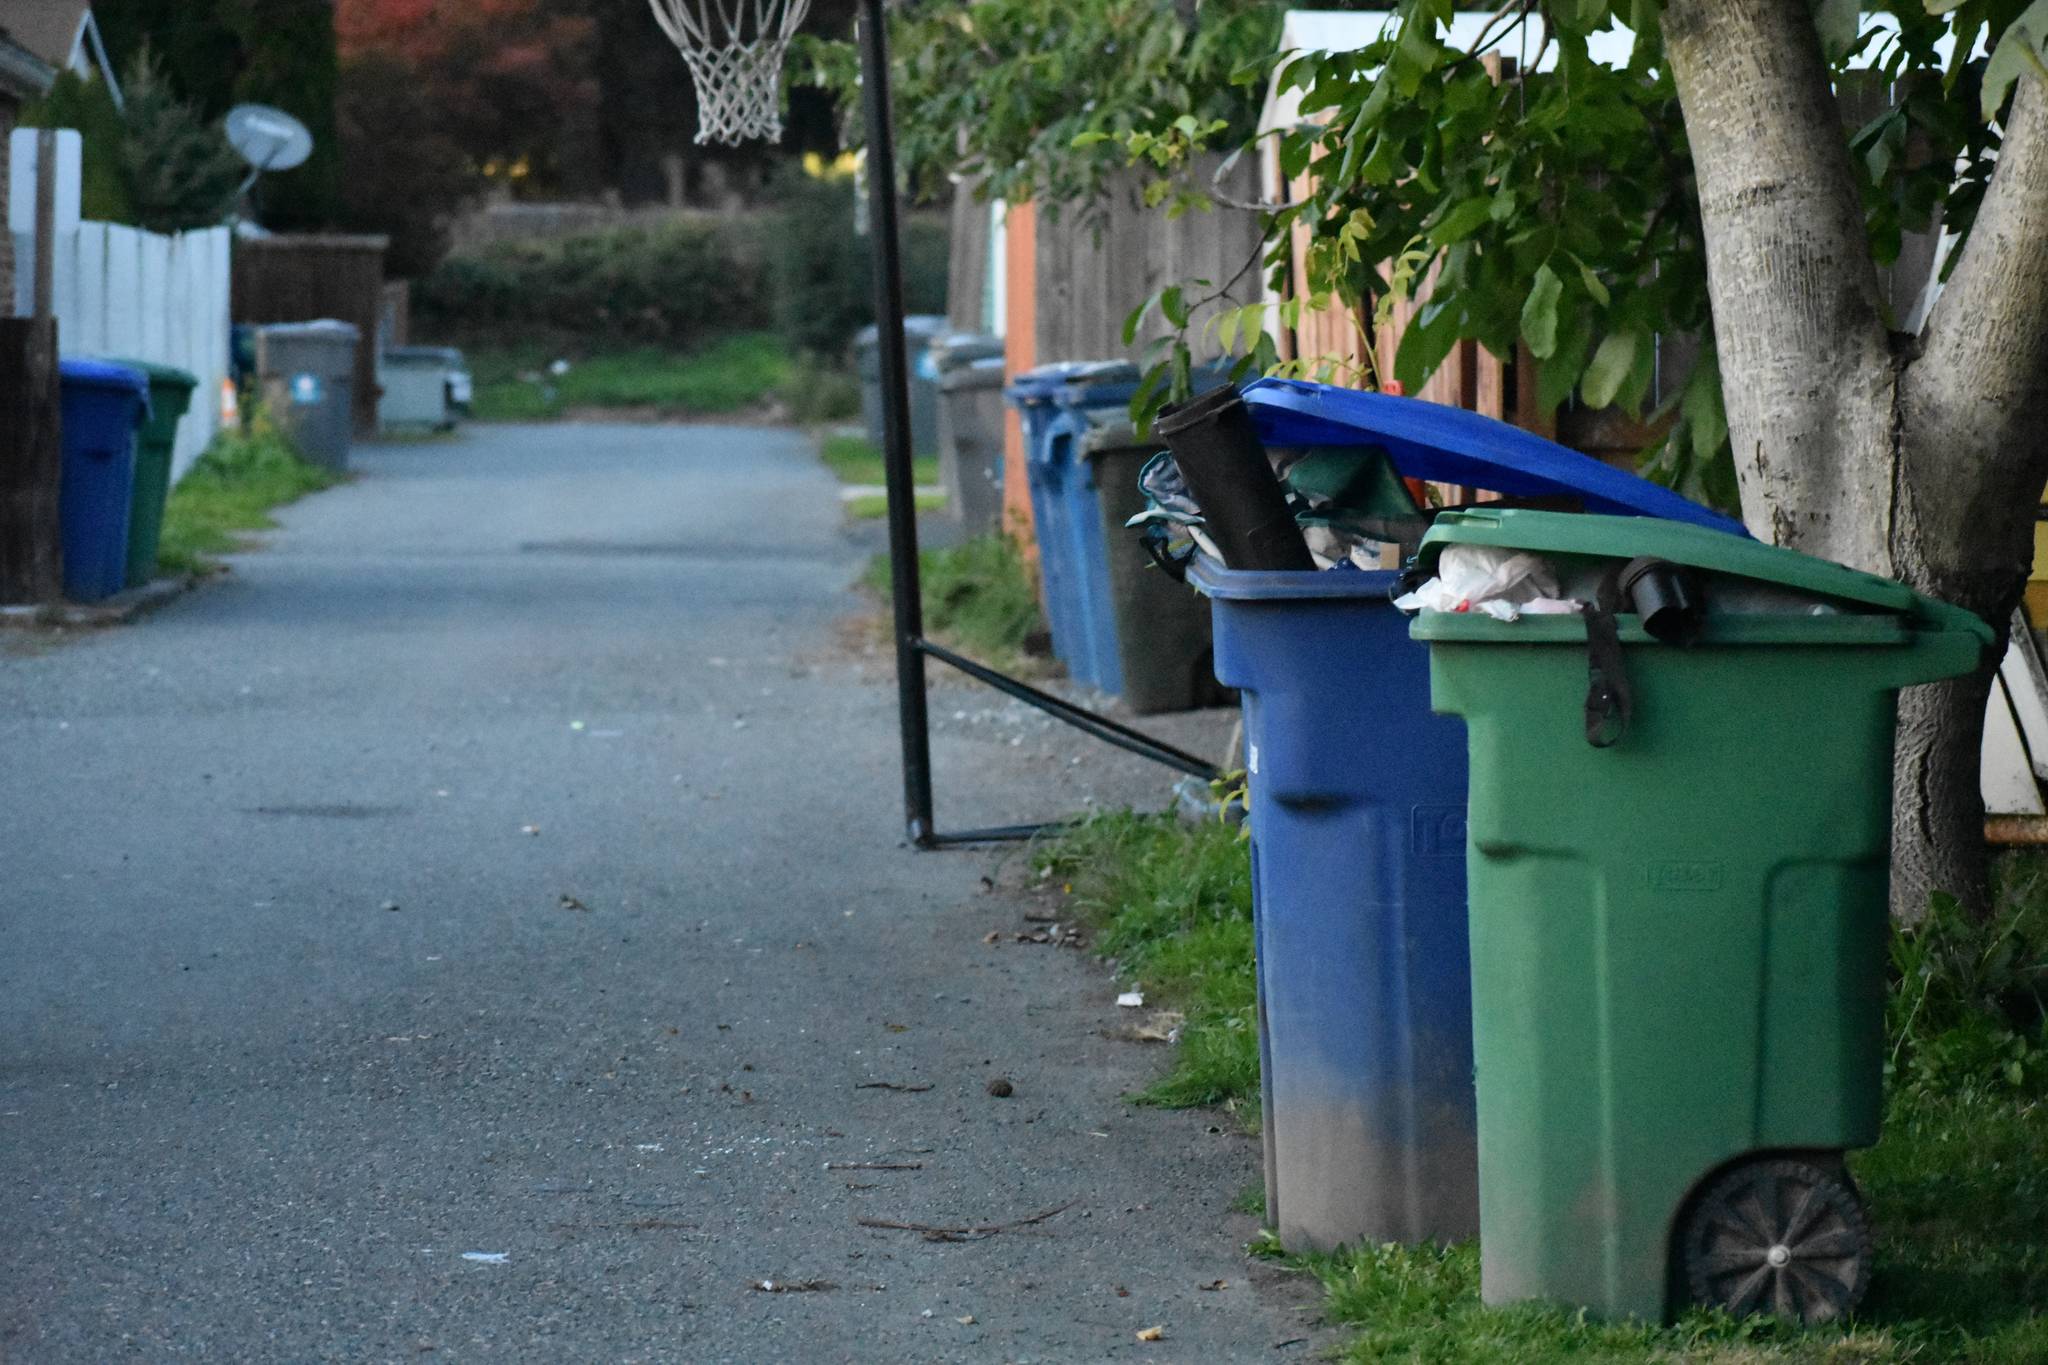 Mayor wants to reexamine trash services